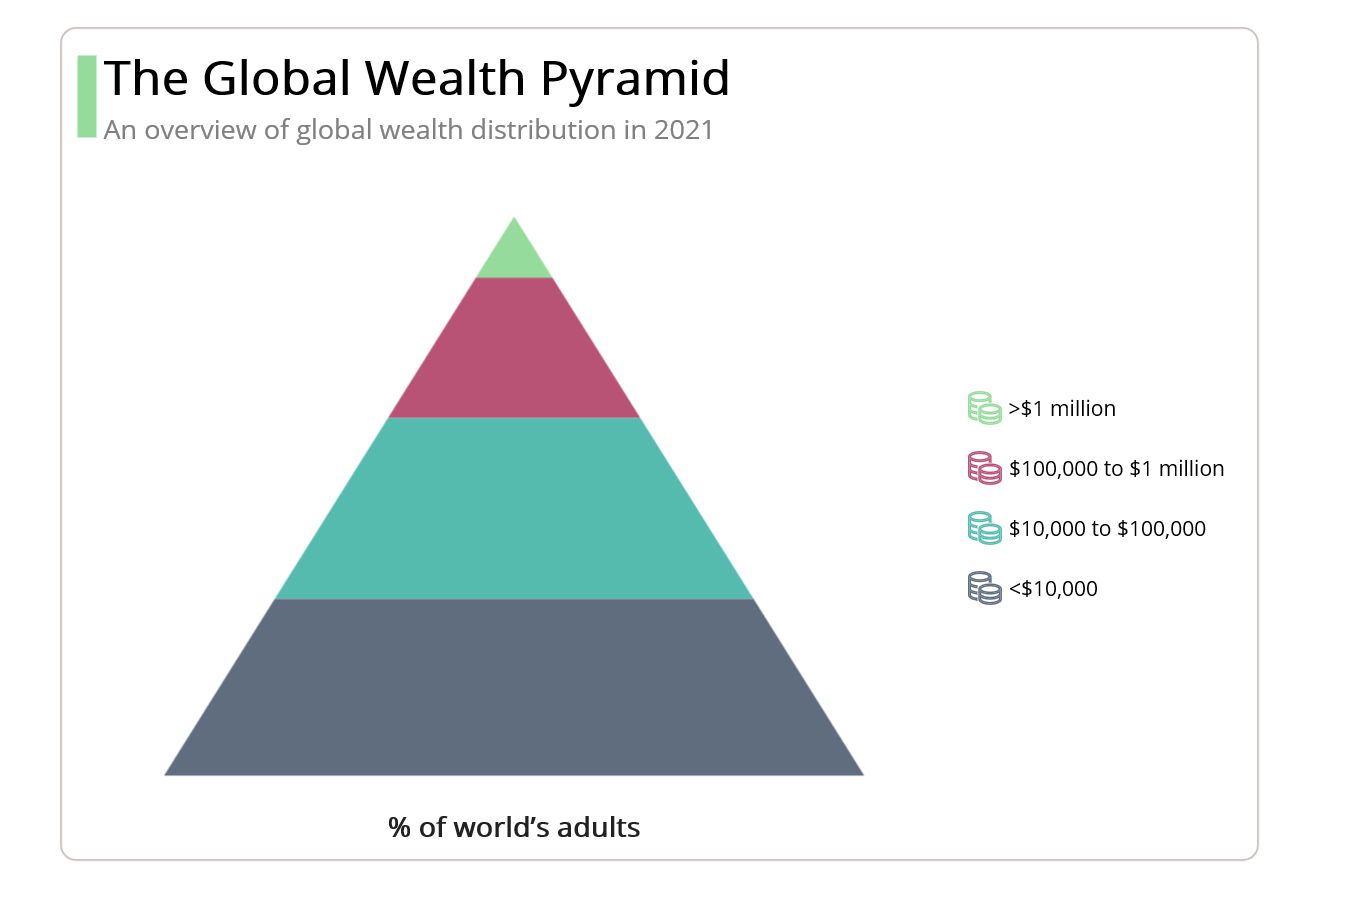 .NET MAUI Pyramid Chart for Global Wealth Distribution